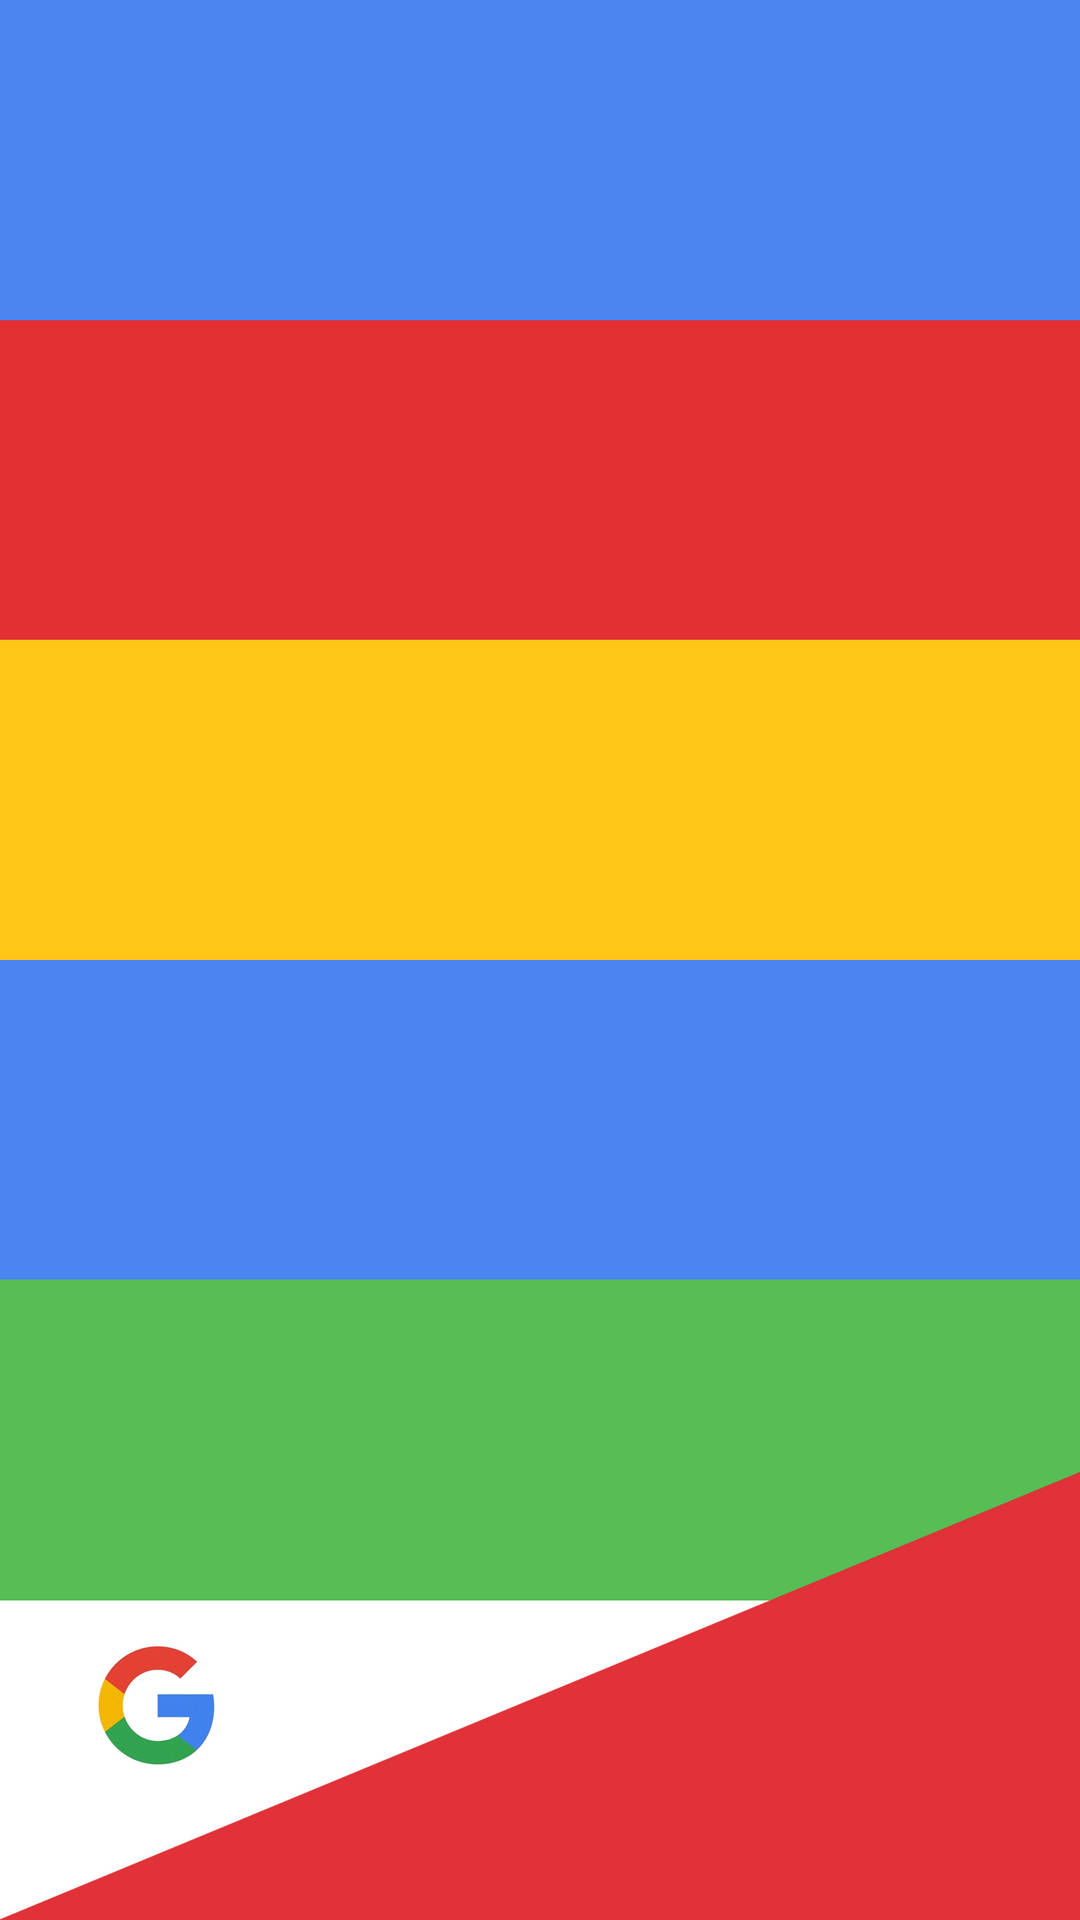 Google Colors Horizontal Stripes